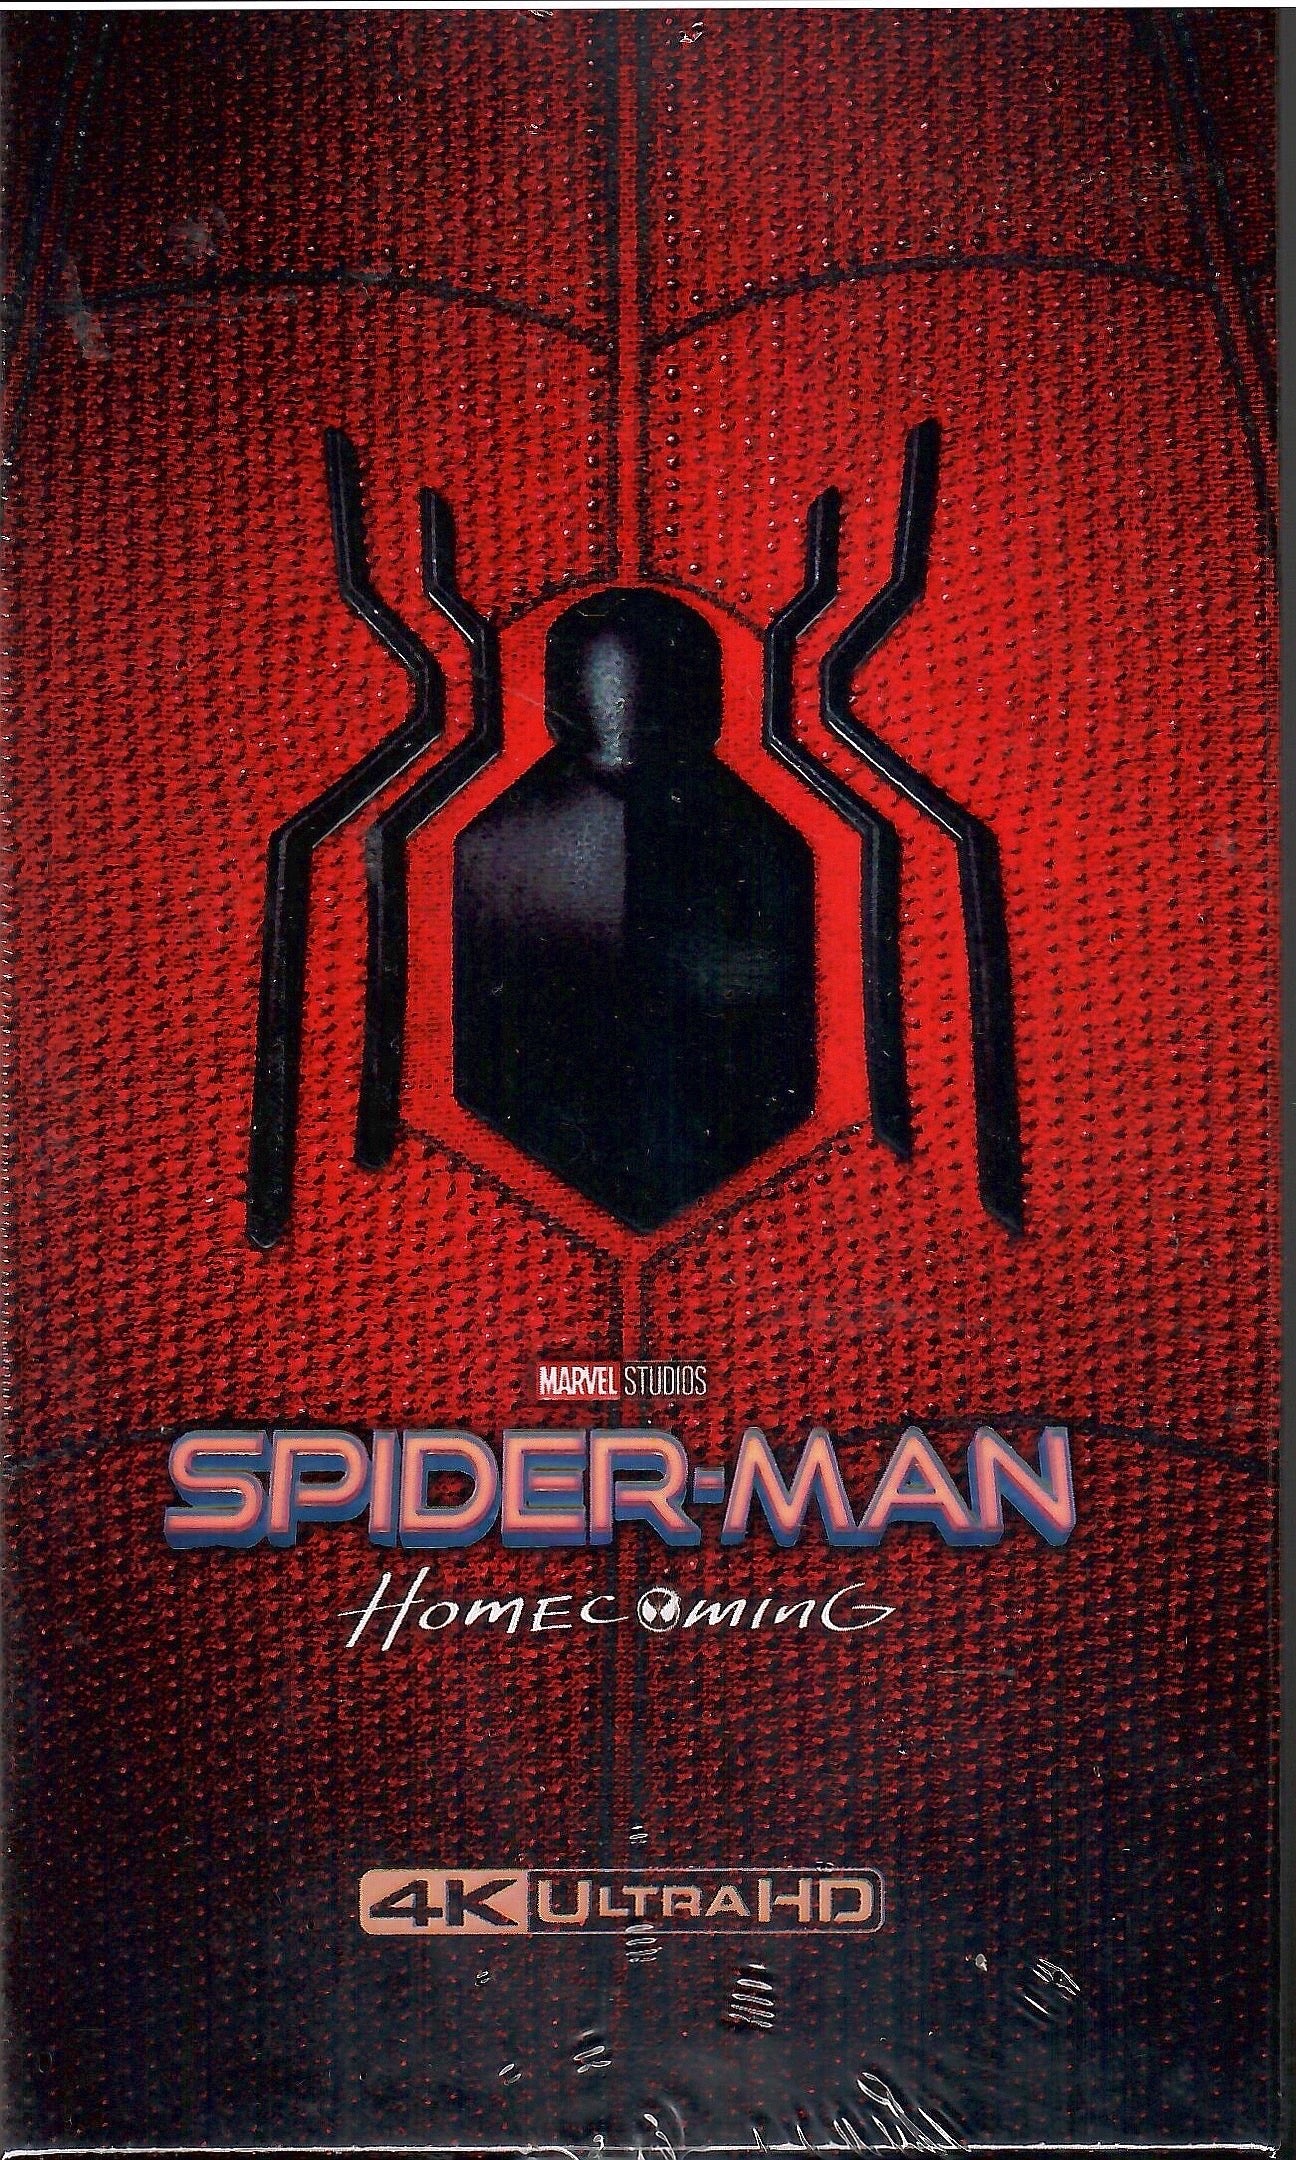 Spider-Man: Homecoming 3D + 4K 1-Click SteelBook (Spiderman)(Korea)